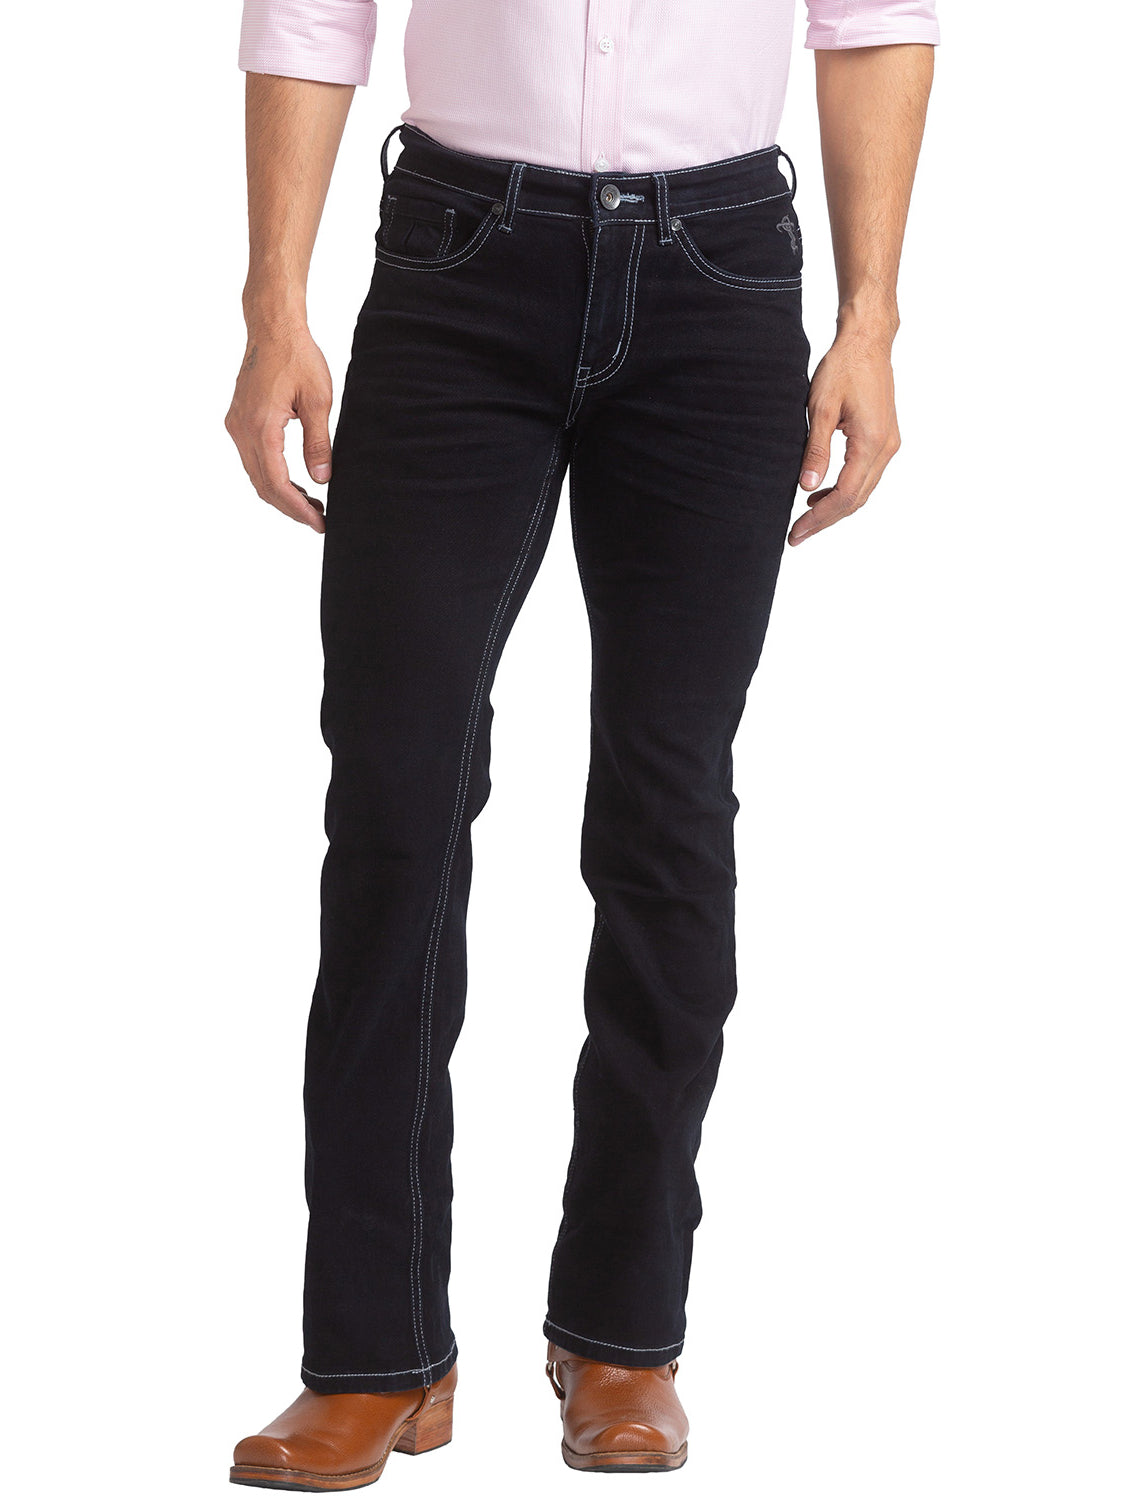 Black Bootcut Jeans for Men